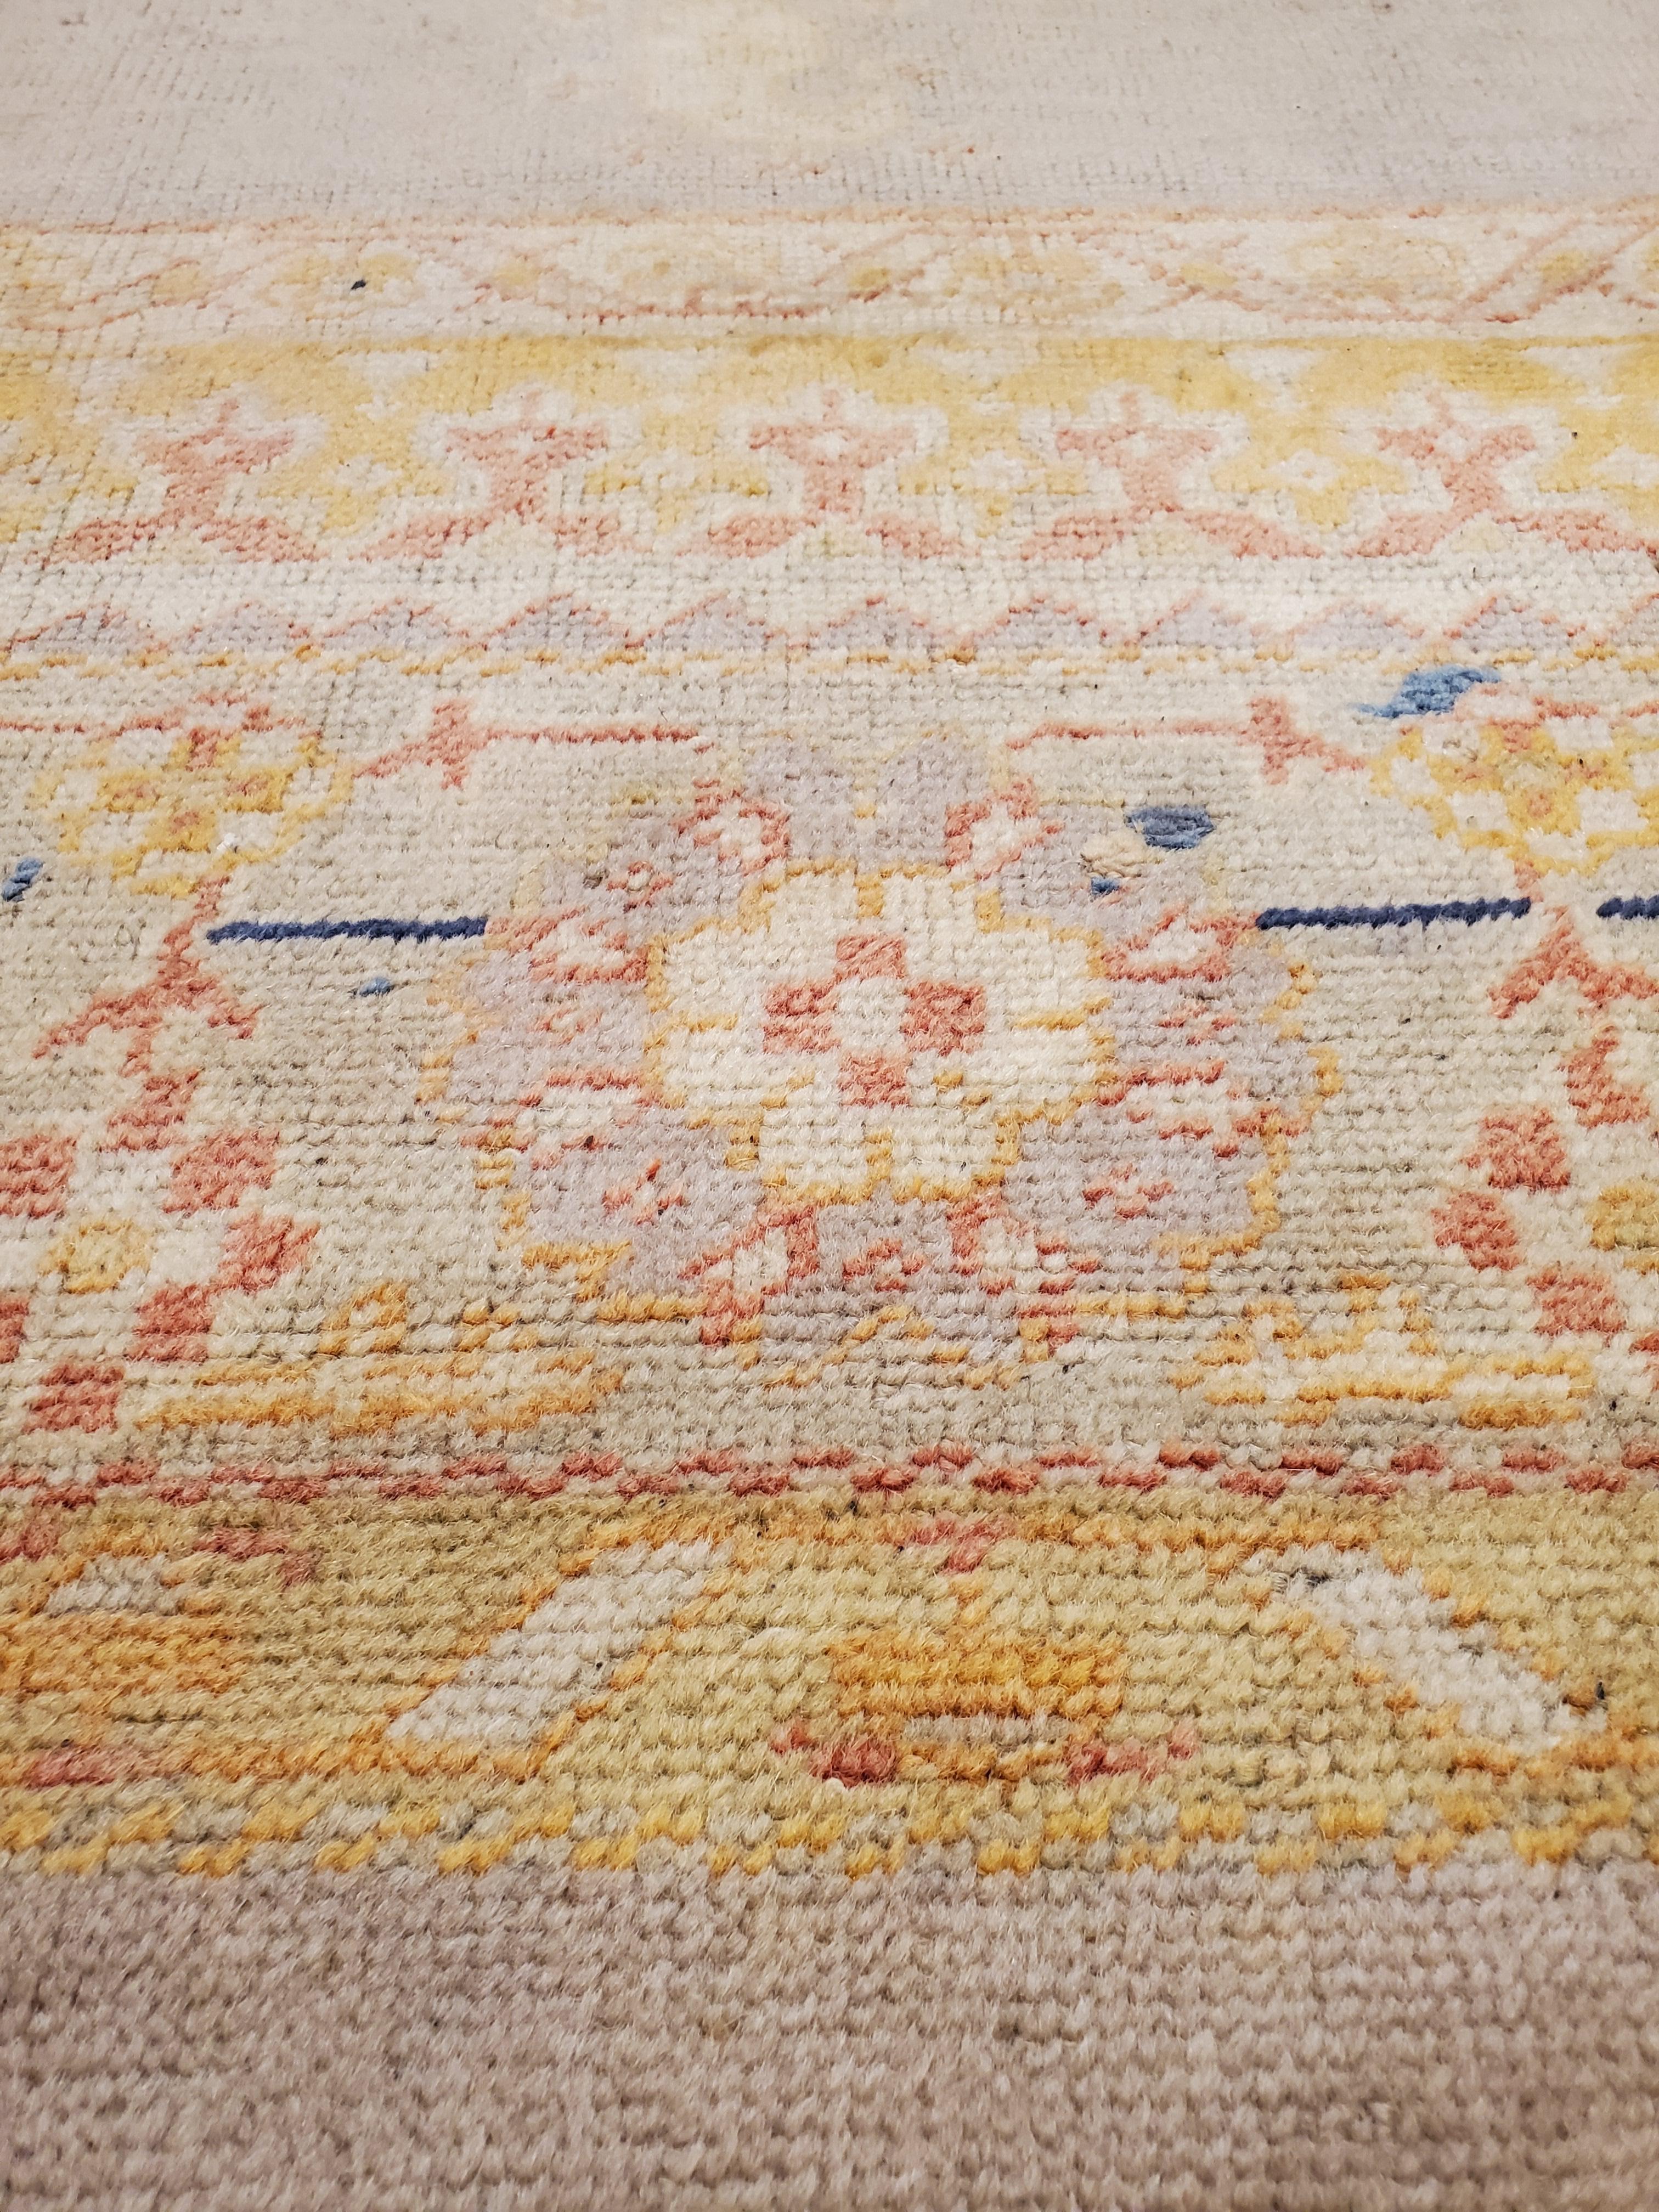 Antique Turkish Oushak Carpet, Handmade Oriental Rug, Gray, Taupe, Saffron Coral 5